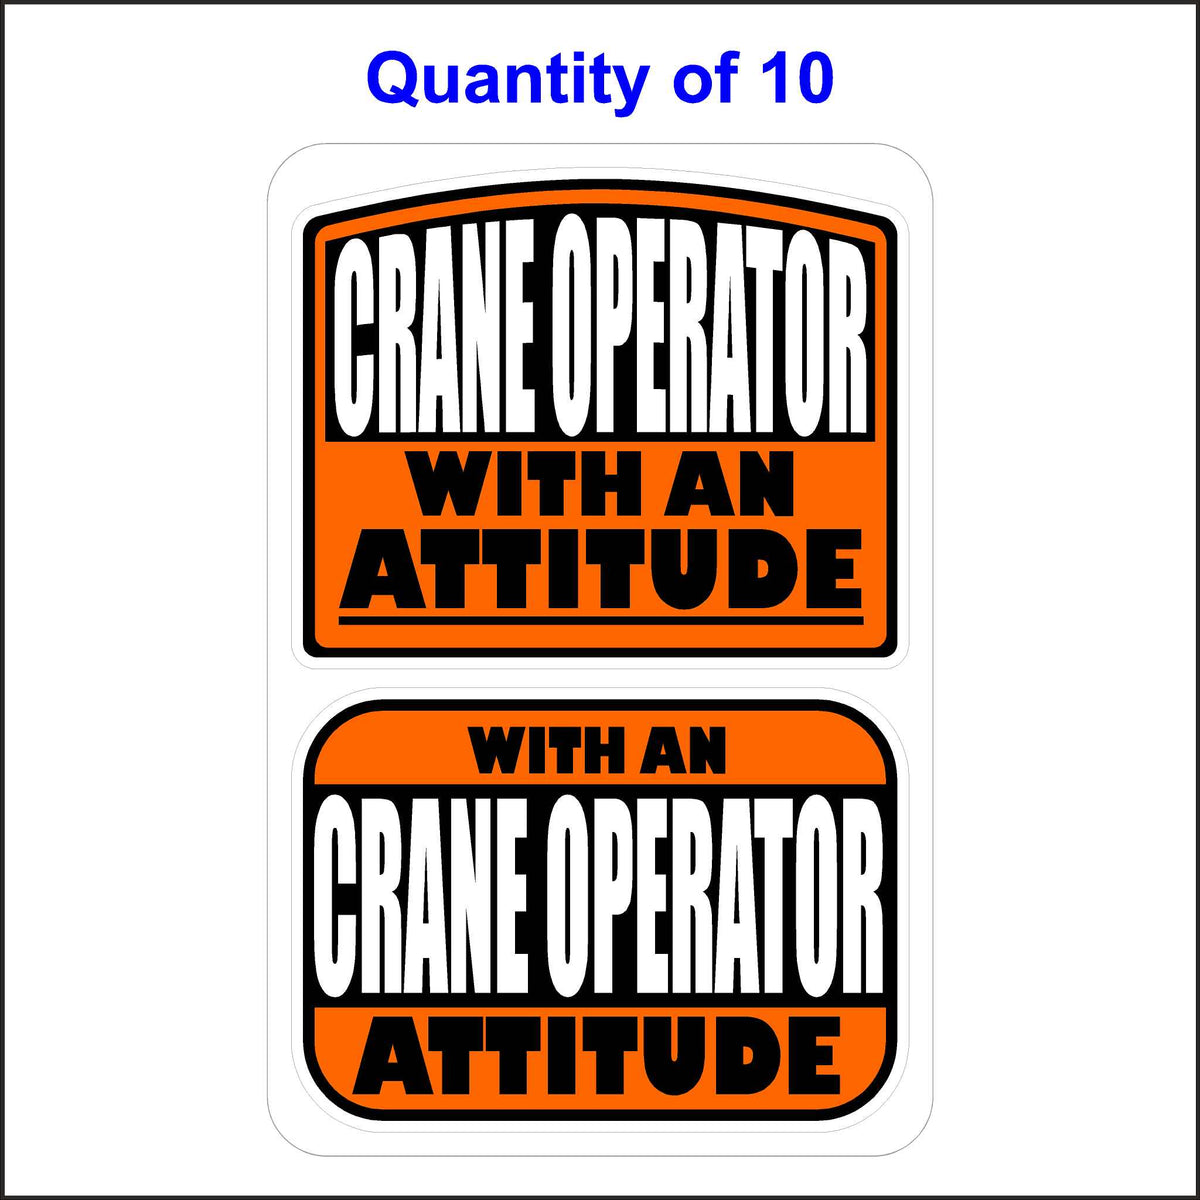 Crane Operator With An Attitude Stickers 10 Quantity.